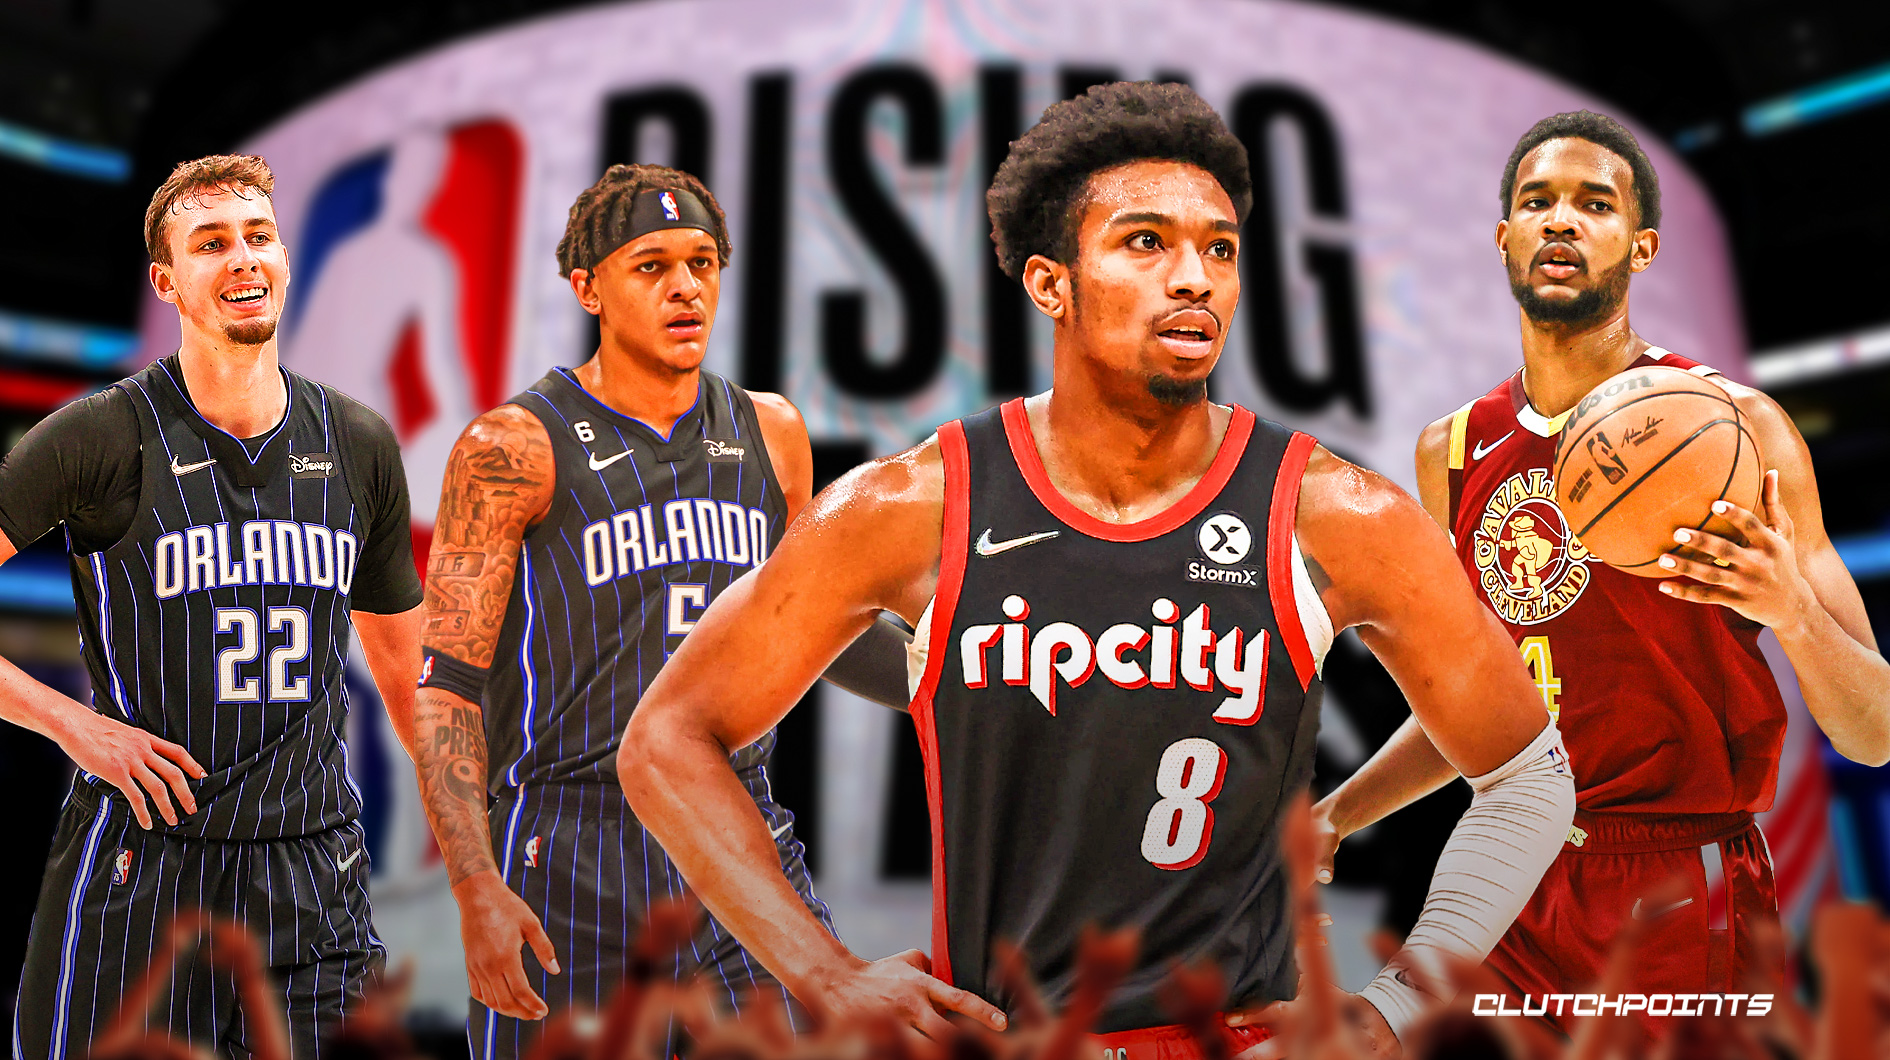 2023 Jordan Rising Stars predictions, odds, time: NBA All-Star